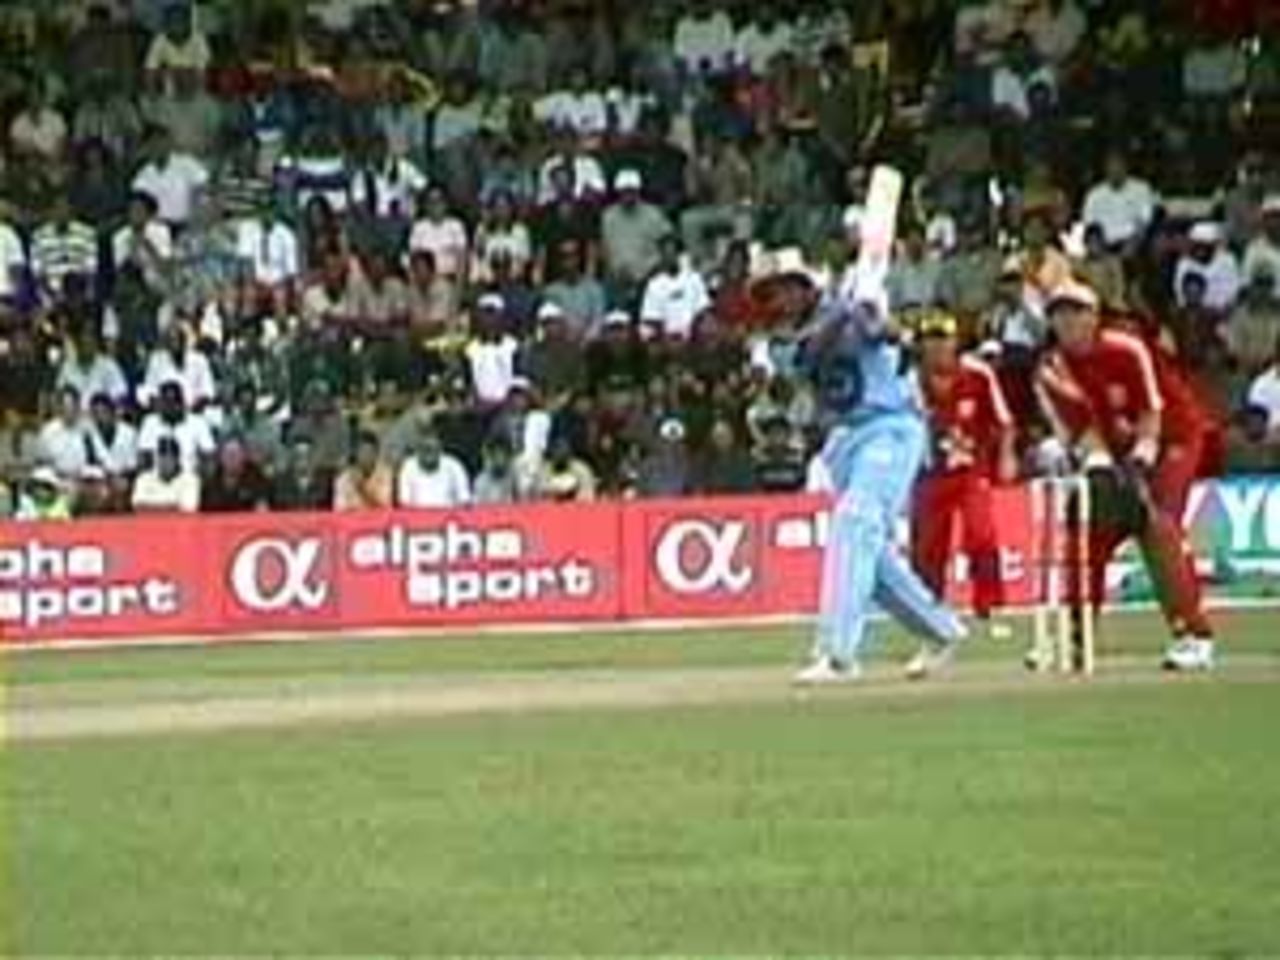 Jadeja ondrives on his way to a quick 88, India v Zimbabwe (2nd ODI), Coca-Cola Singapore Challenge, 1999-2000, Kallang Ground, Singapore, 4 Sep 1999.